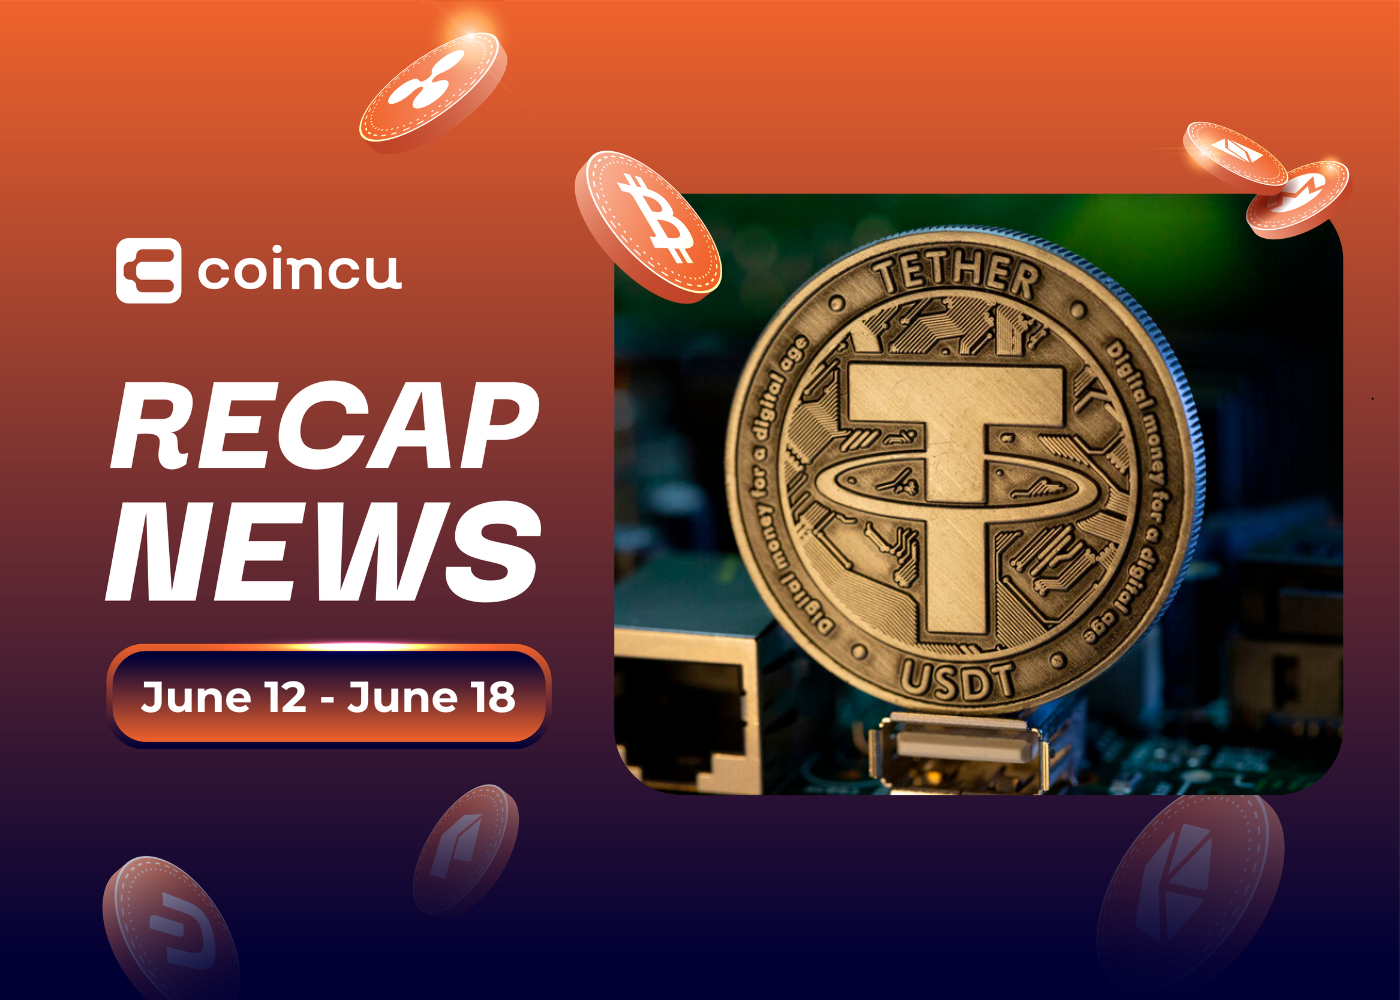 Weekly Top Crypto News (June 12 - June 18)